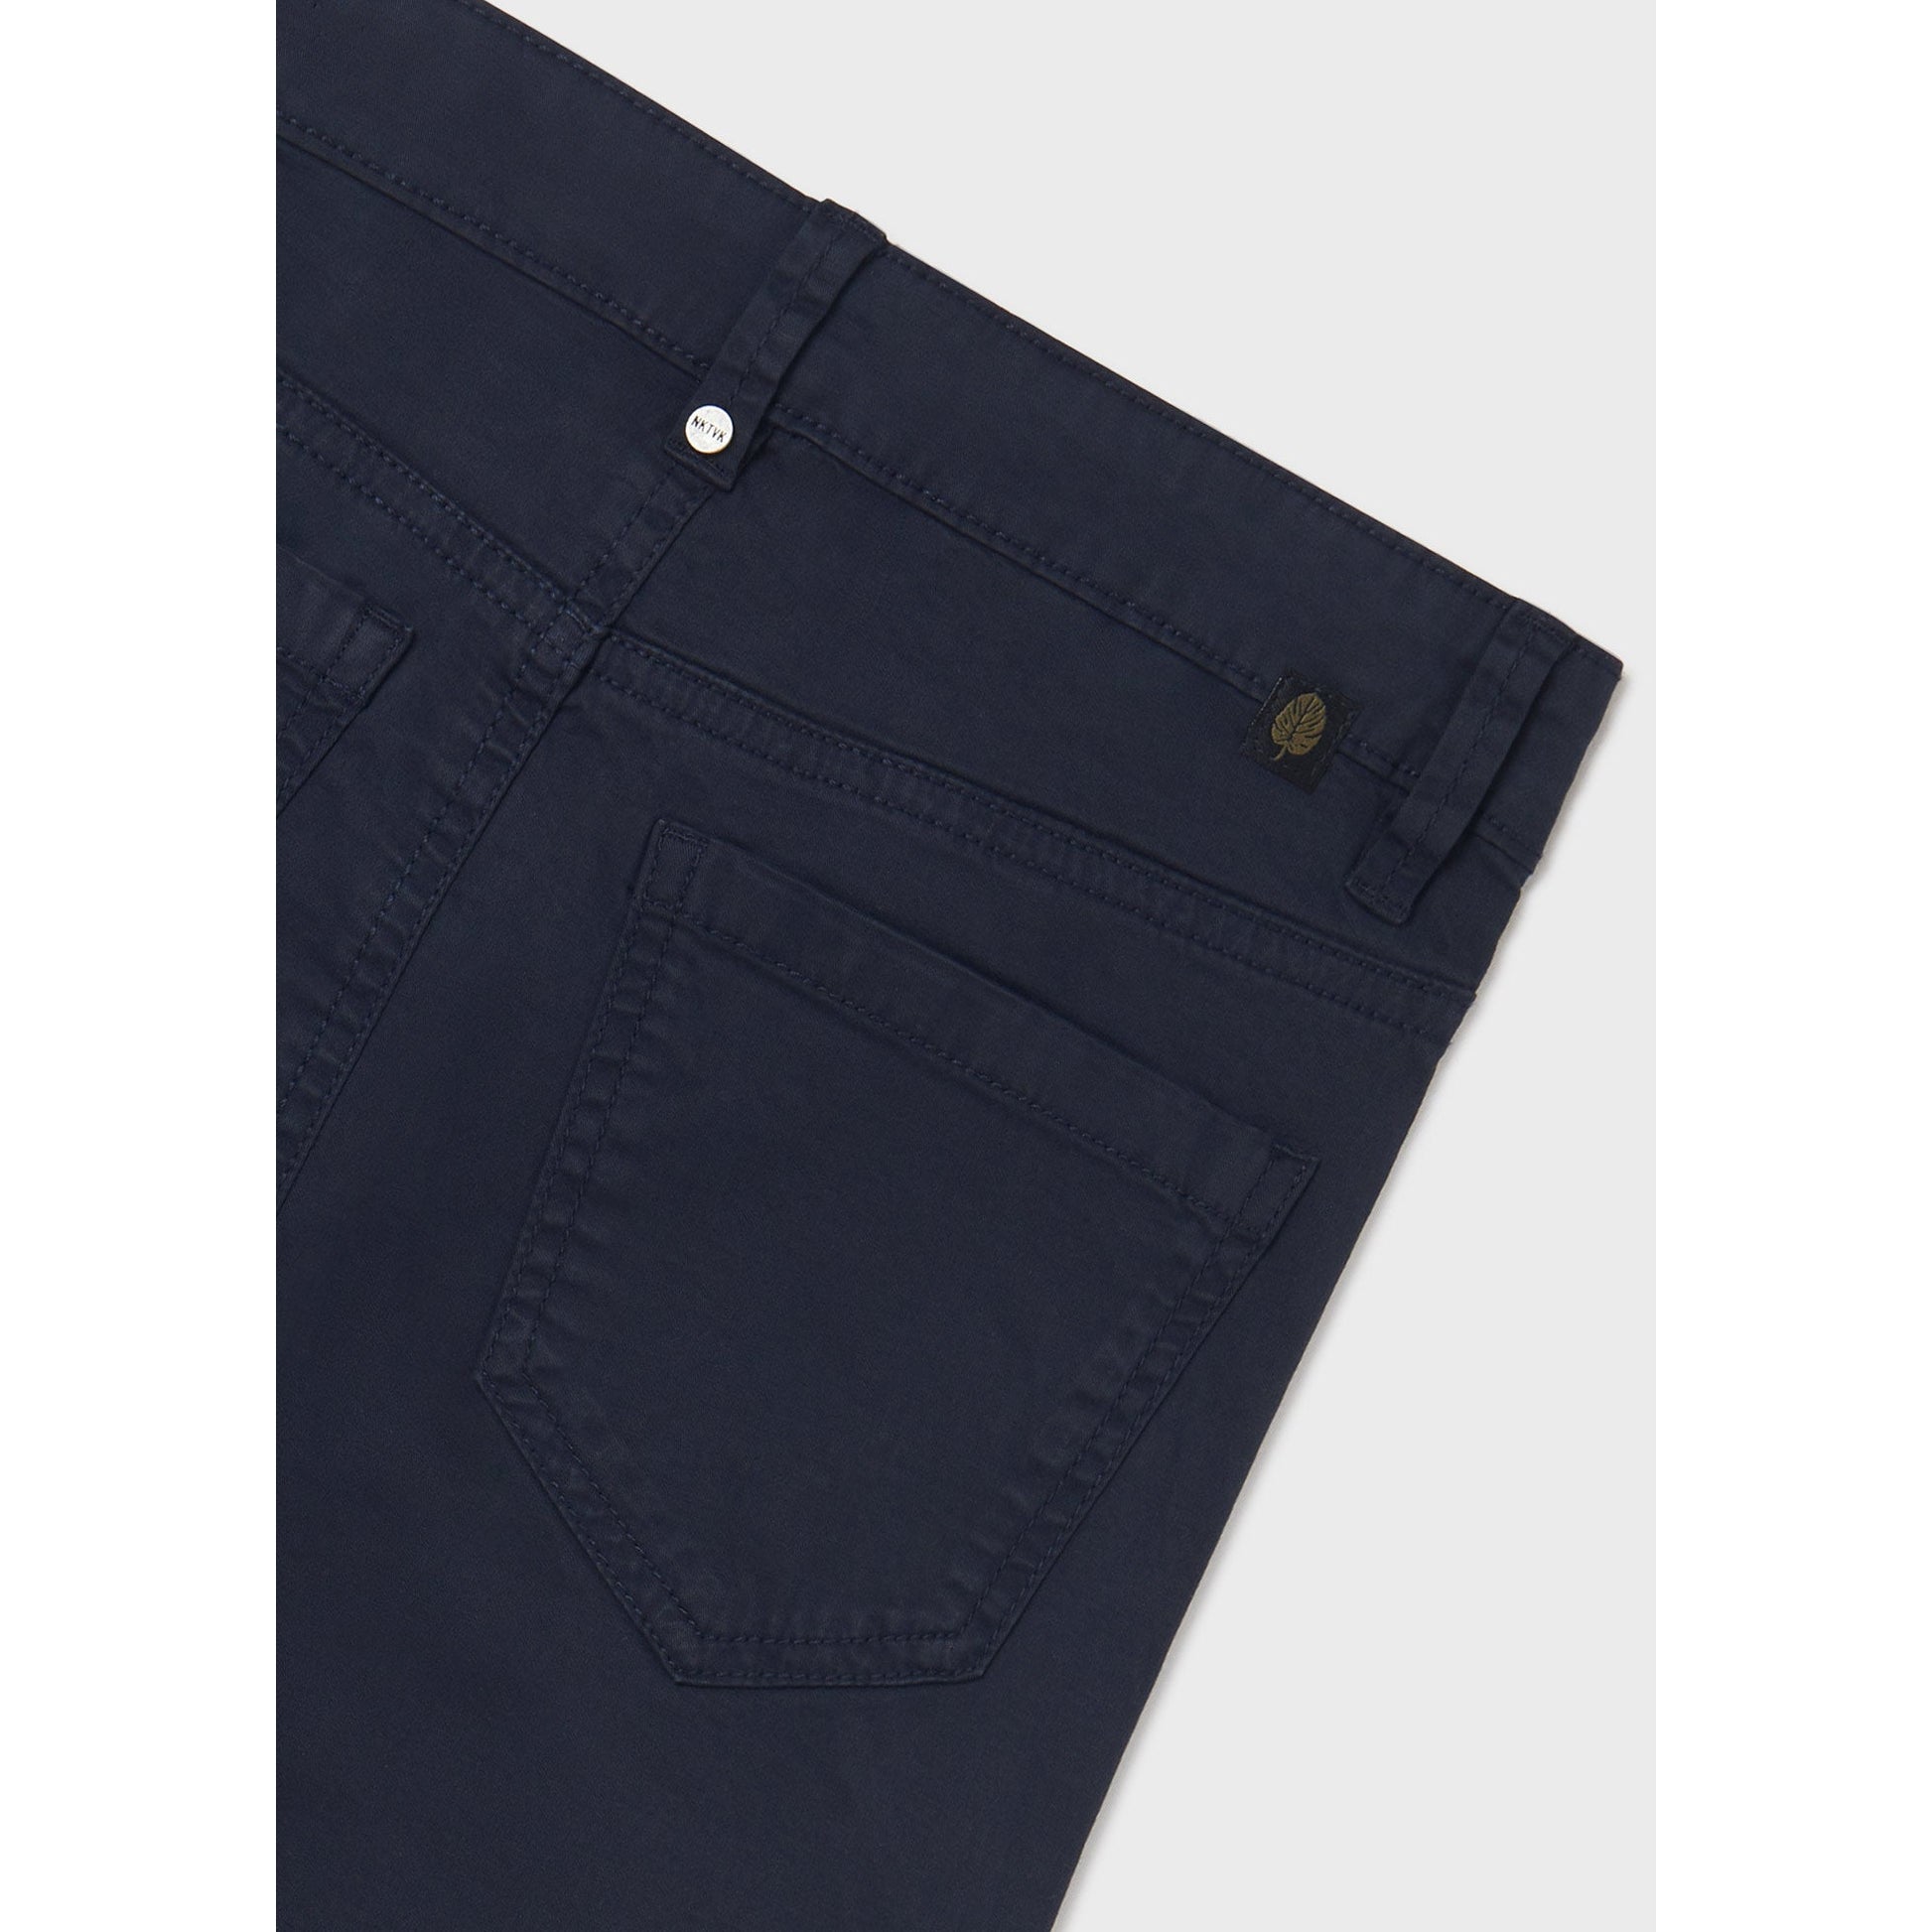 Nukutavake Boys Grey 5 Pocket Slim Fit Pant _582-22 – NorthBoys